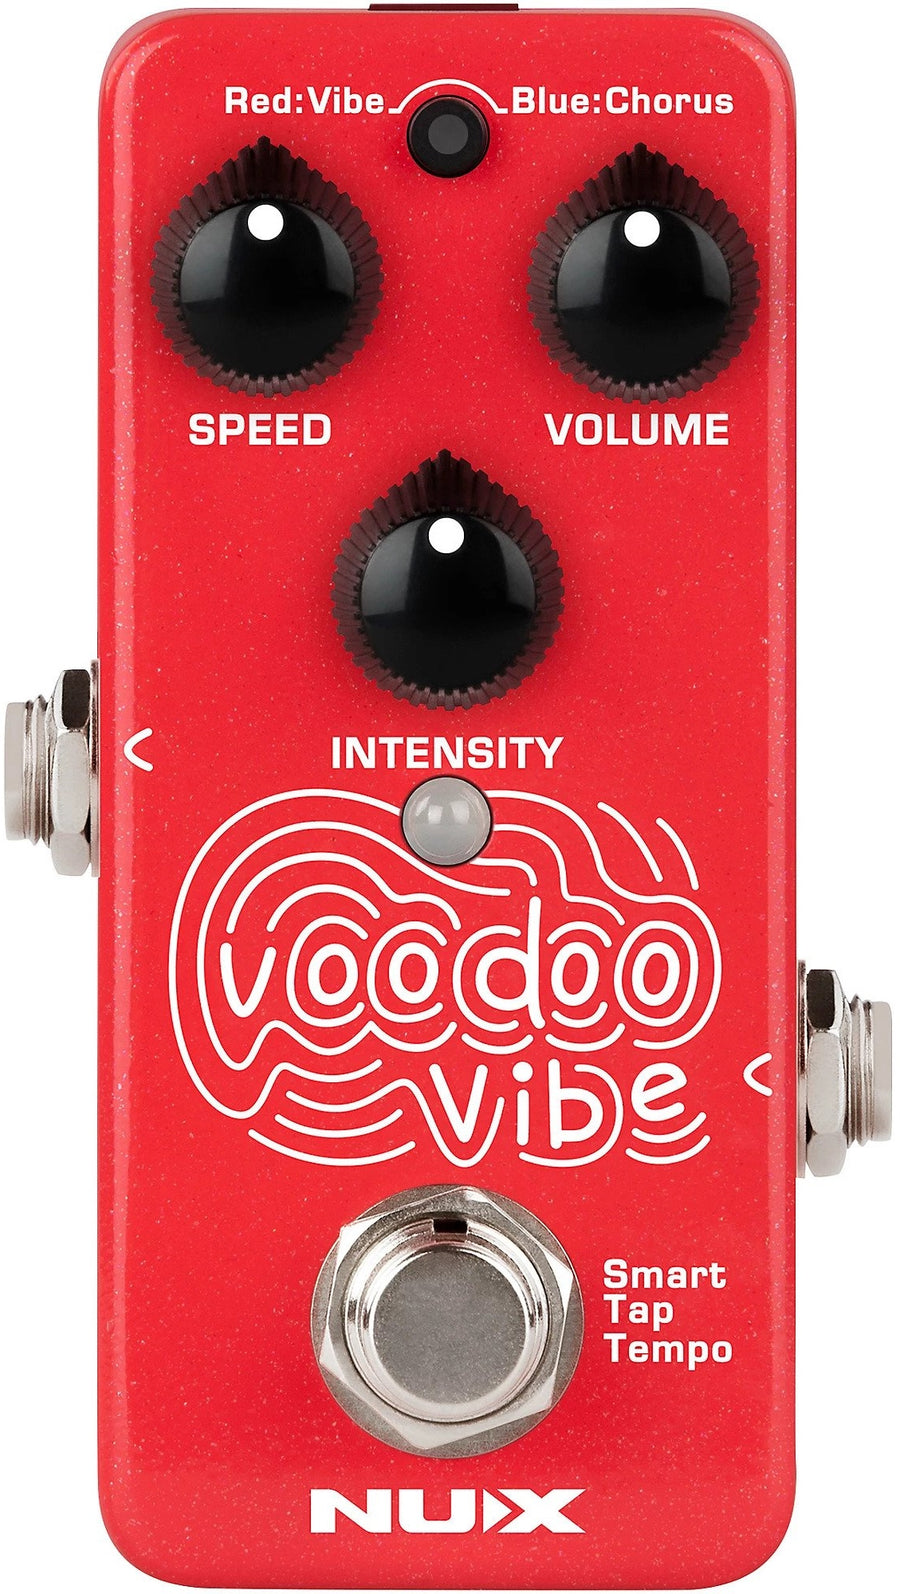 NuX Mini Core Voodoo Vibe